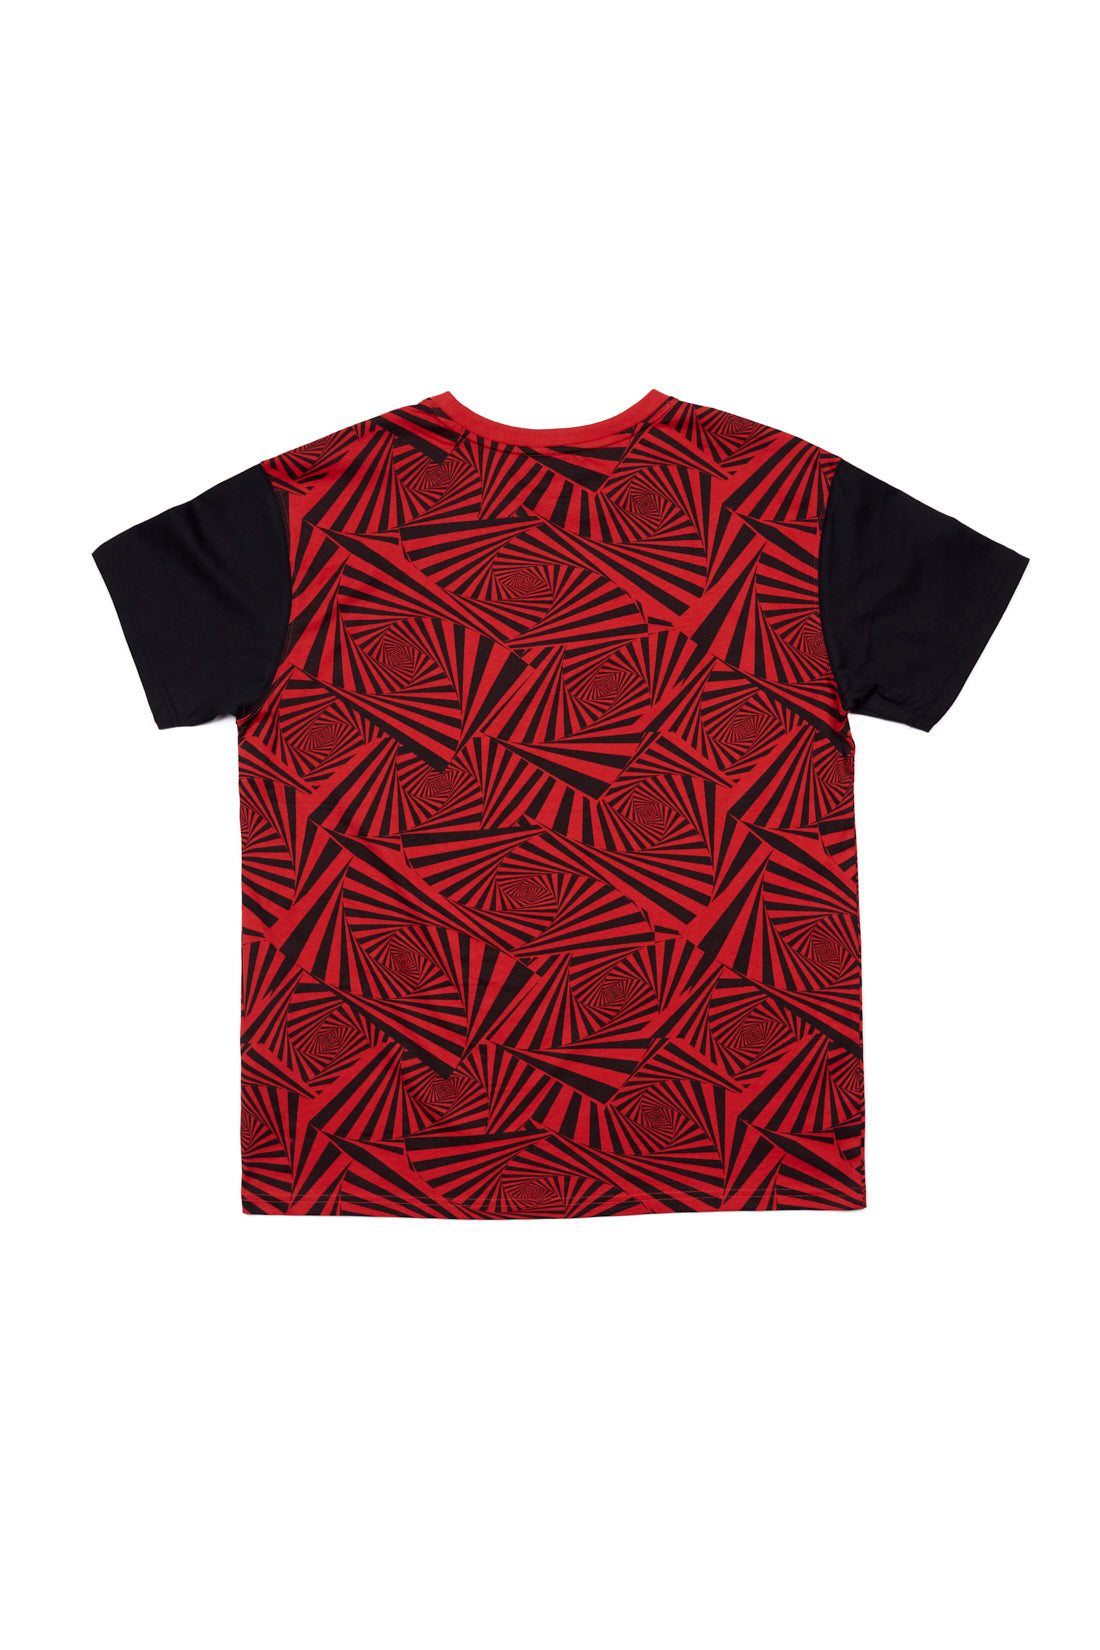 Spirals Aop Logo T-Shirt - Red/Black - DENIM SOCIETY™